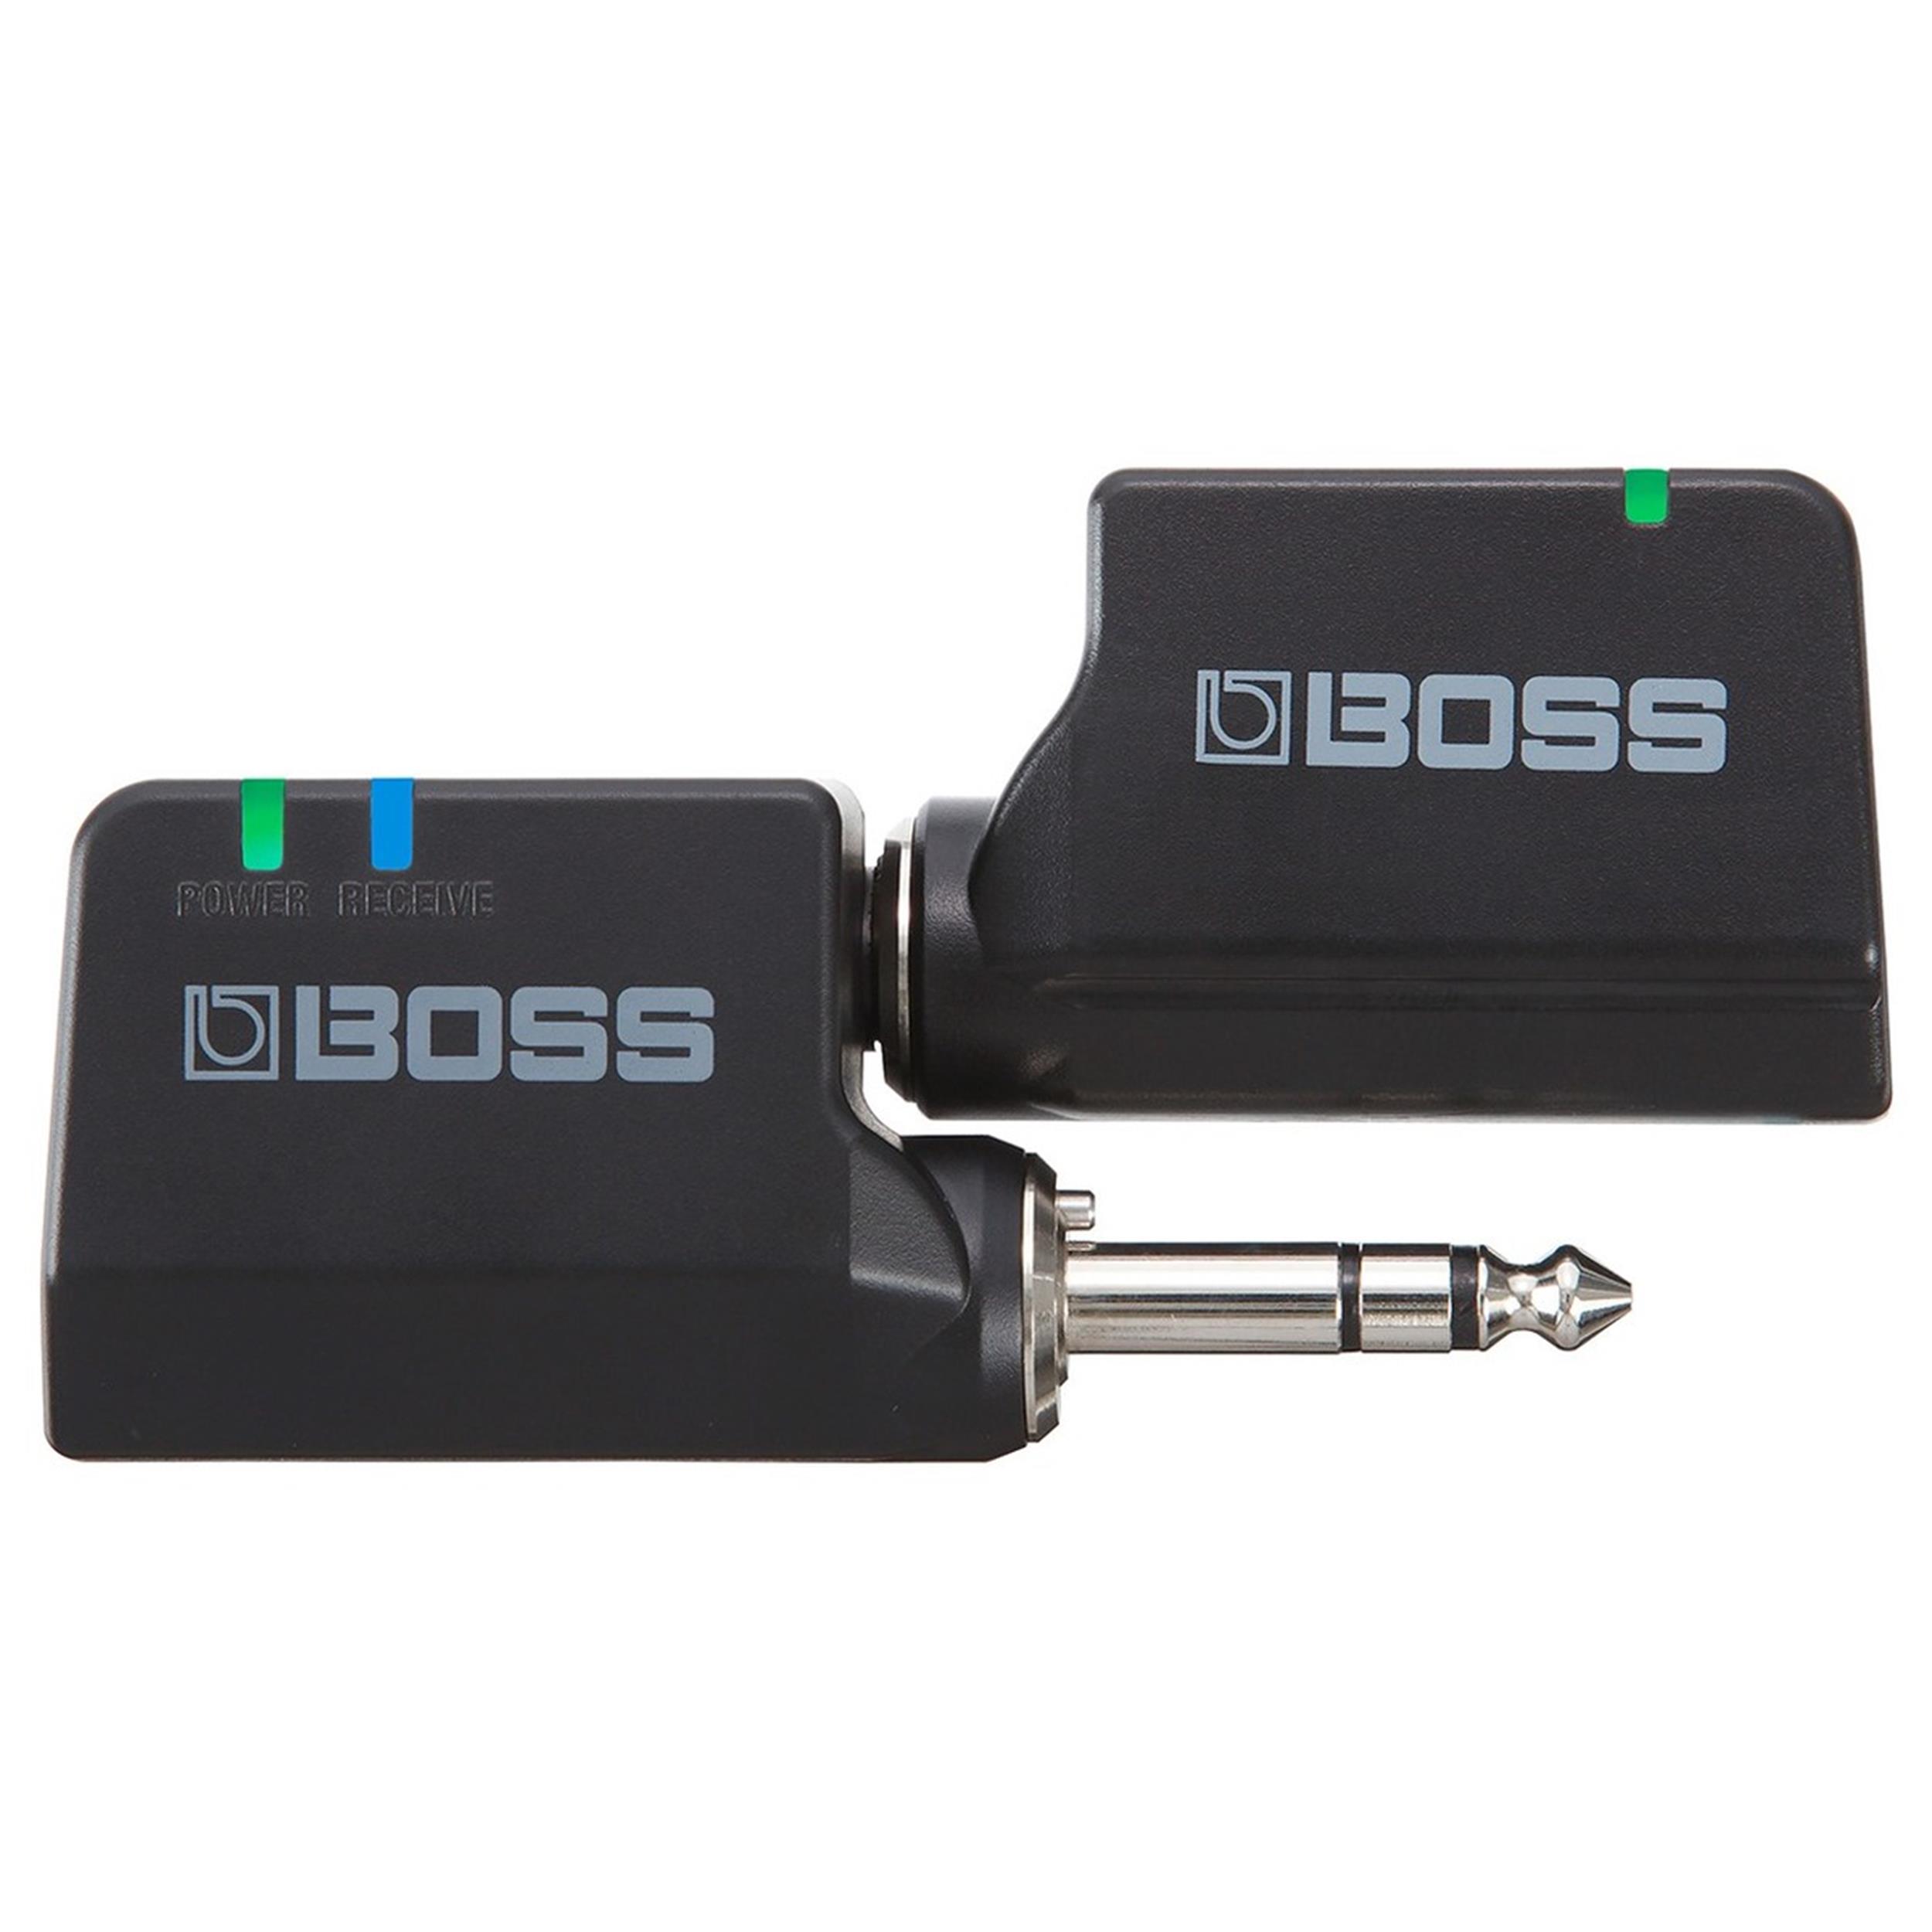 BOSS WL 20 WIRELESS GUITAR SYSTEM - Chitarre Wireless Per Strumenti